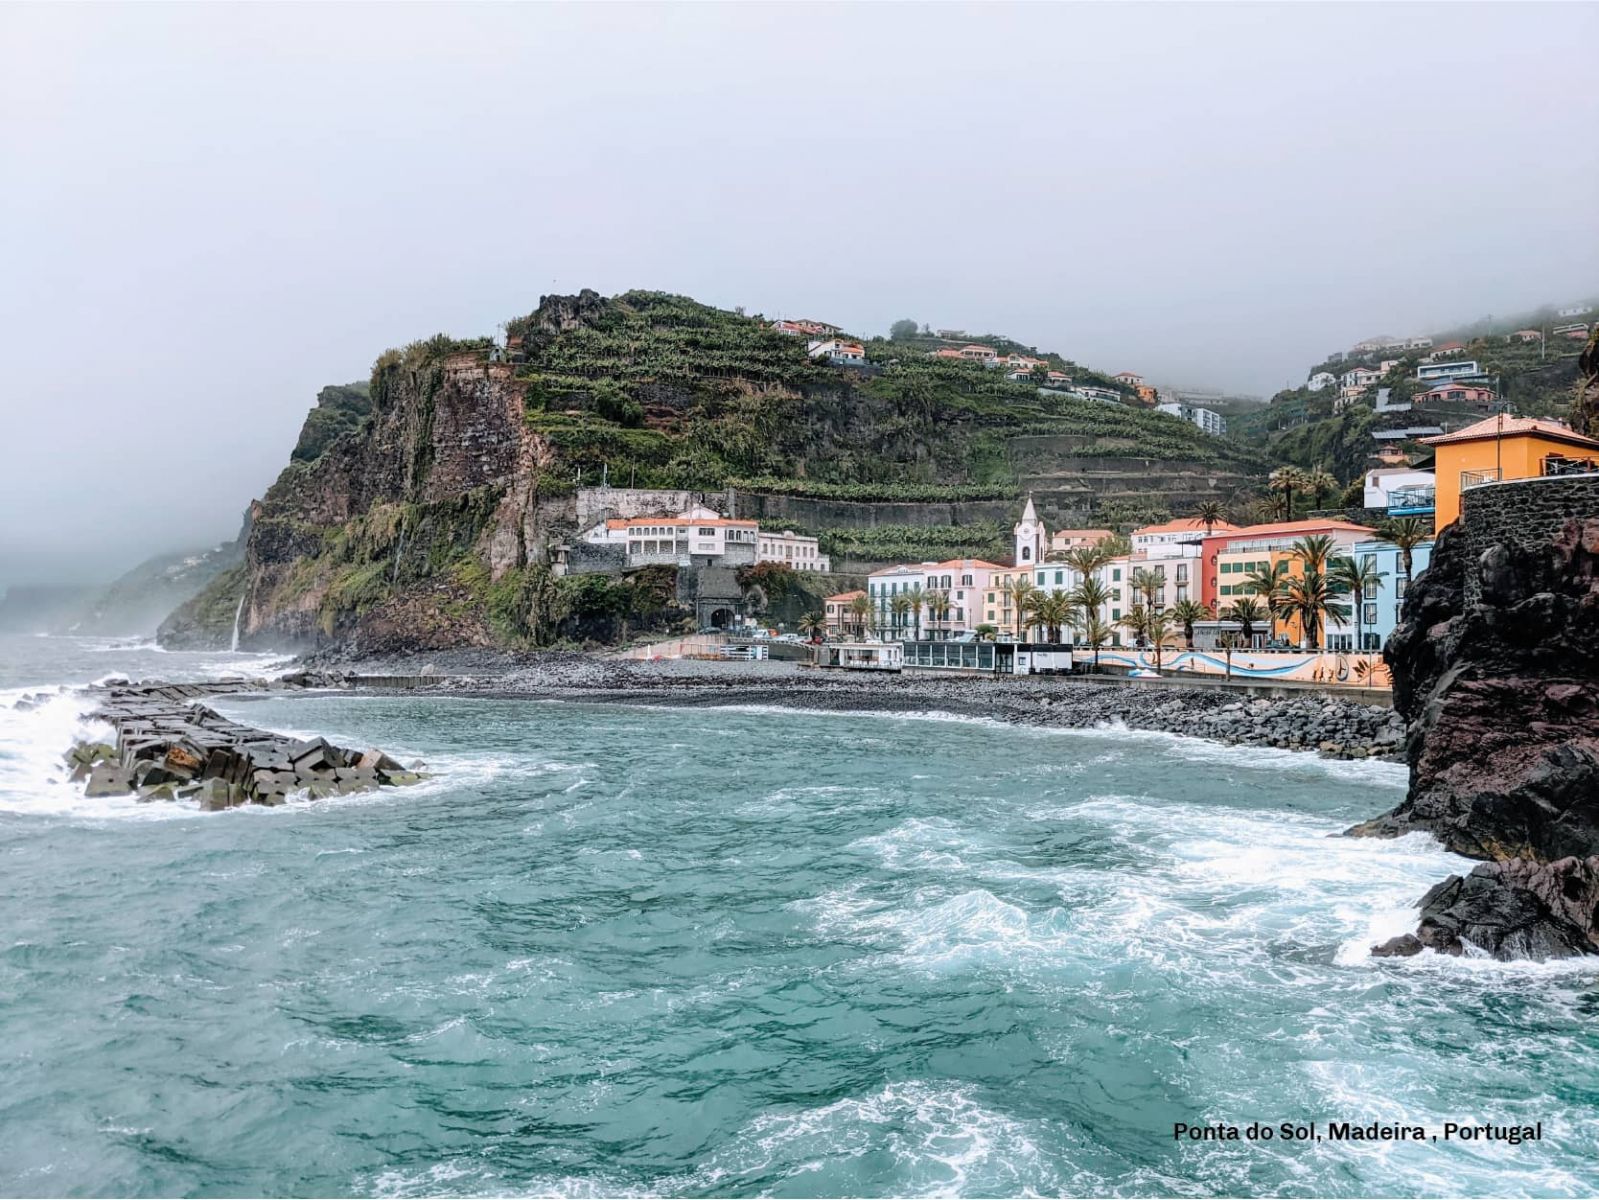 Europe]s first Digital Nomad Villa in Ponta do Sol, Madeira, Portugal. Image Credit: Greg Hadala